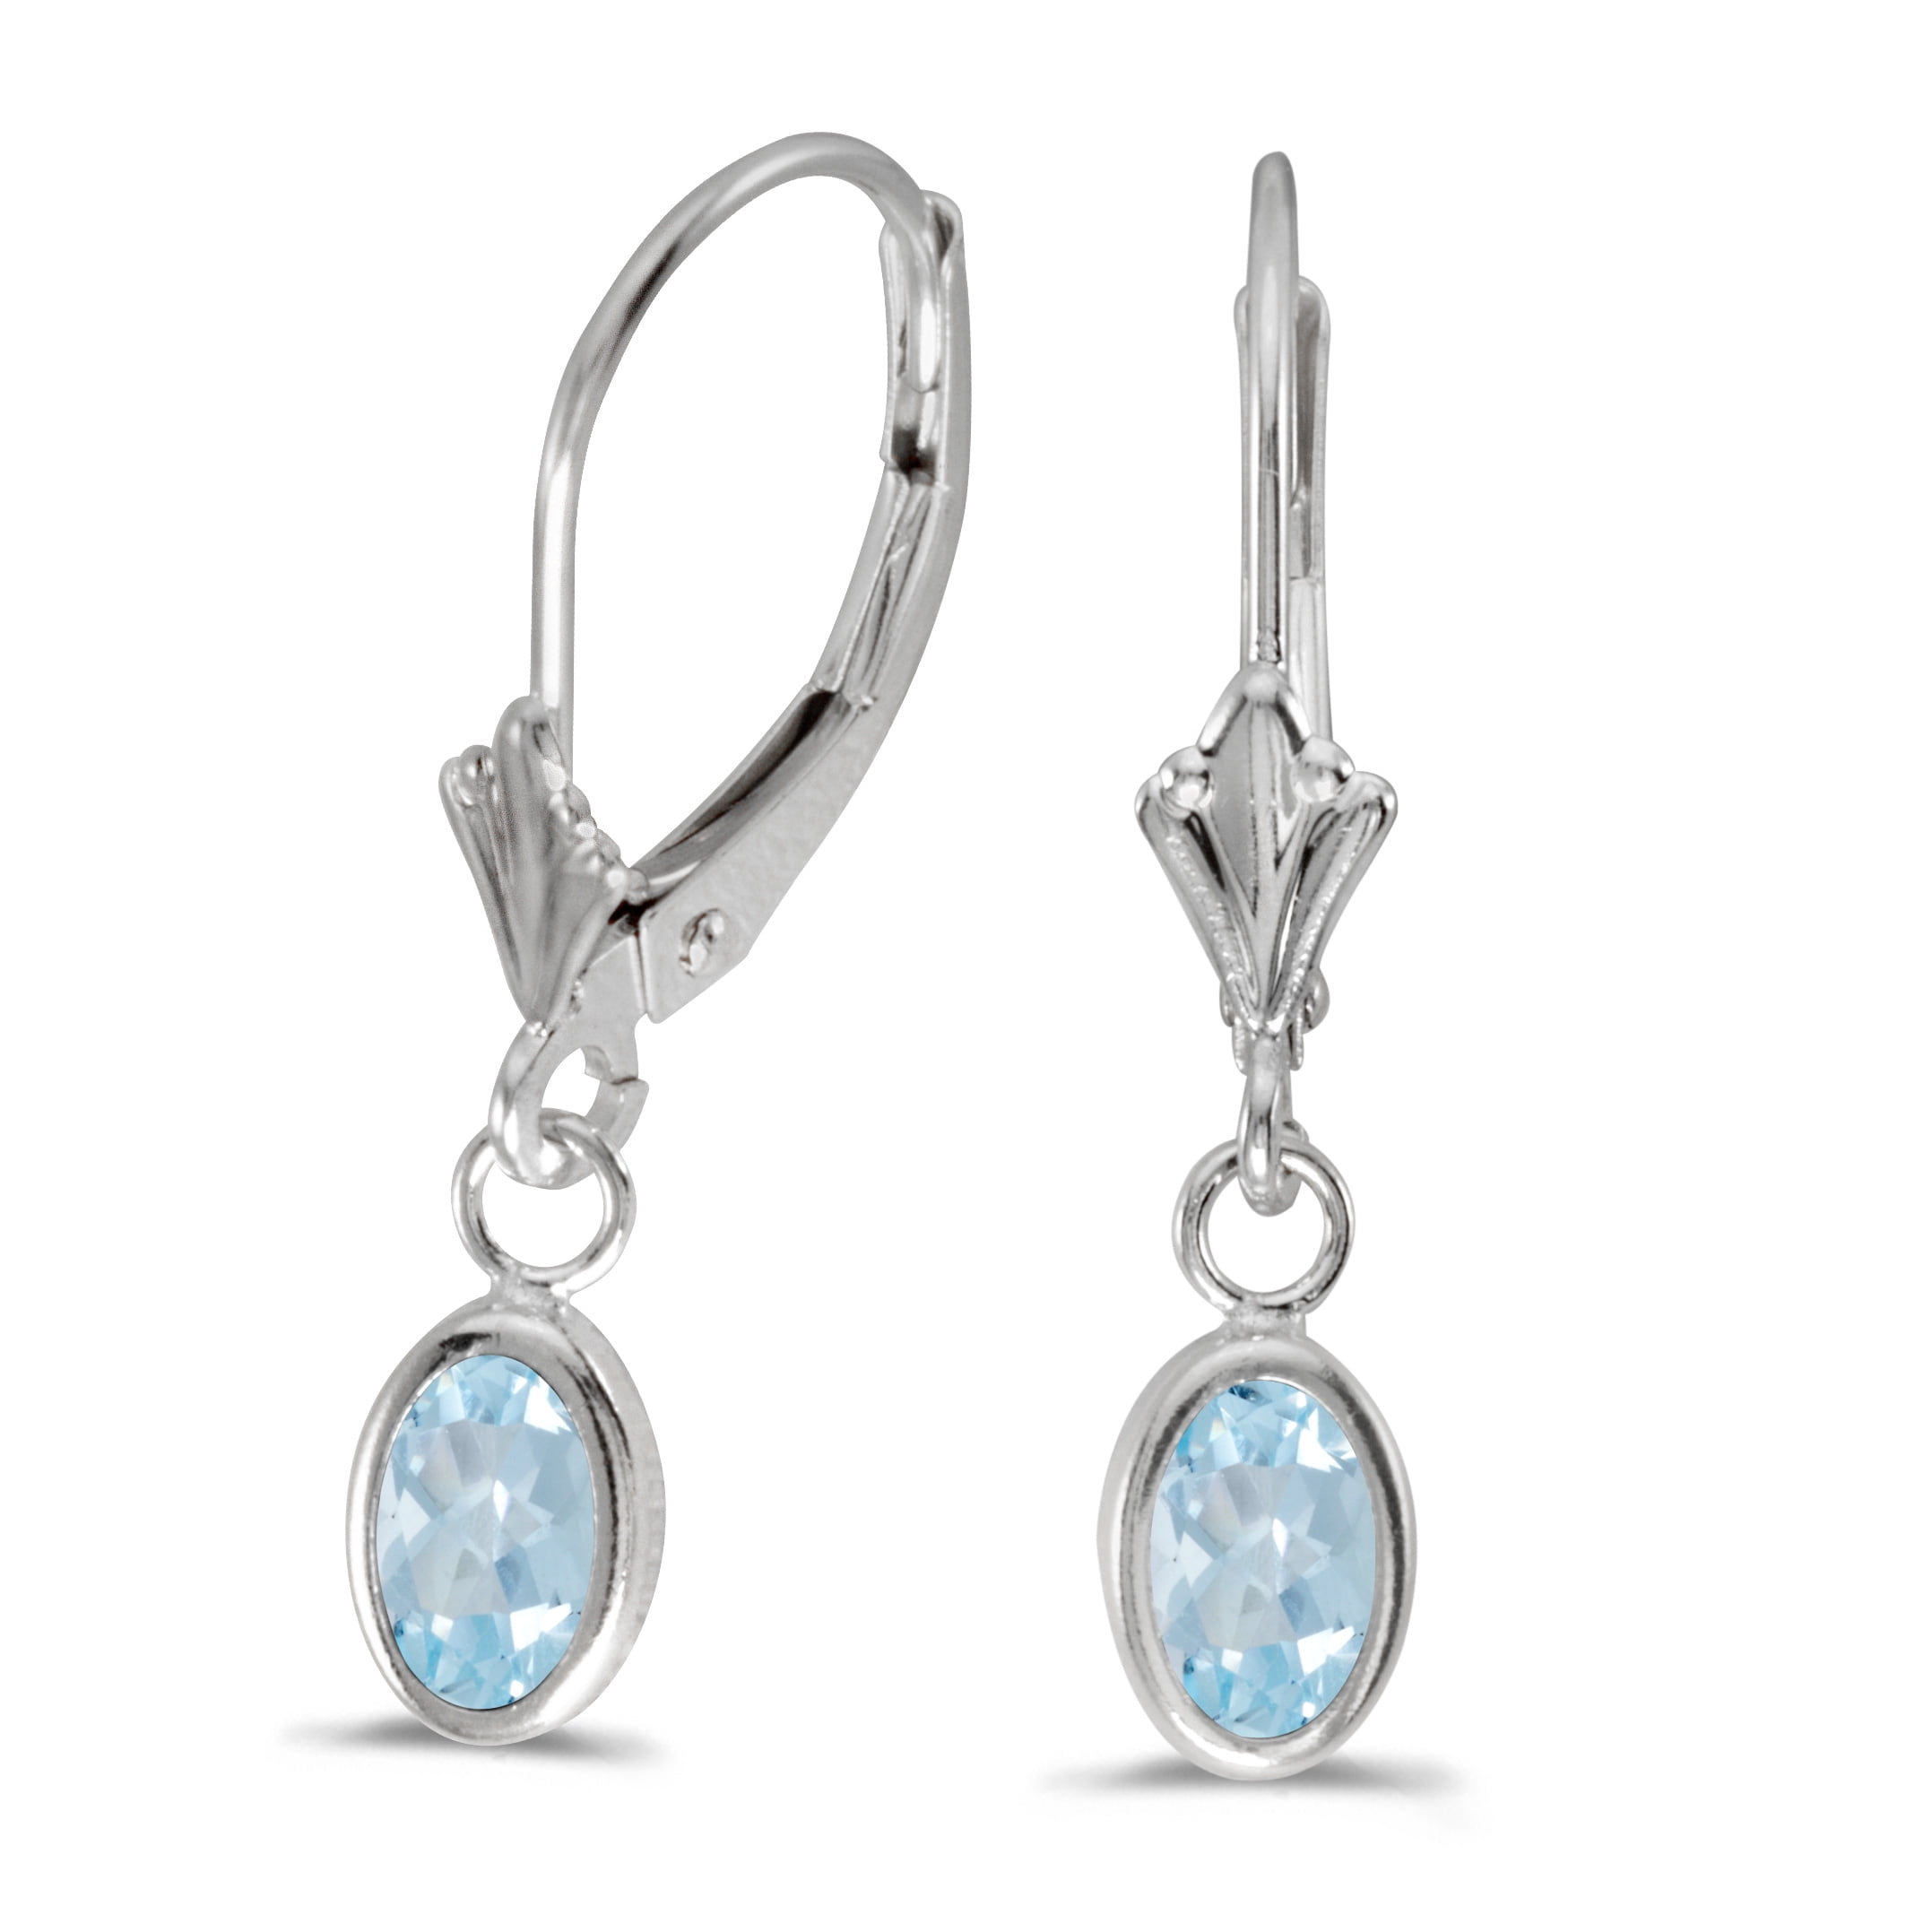 Sterling Silver Natural Aquamarine Earrings Dangle Lever Back Earrings *VARIETY* 